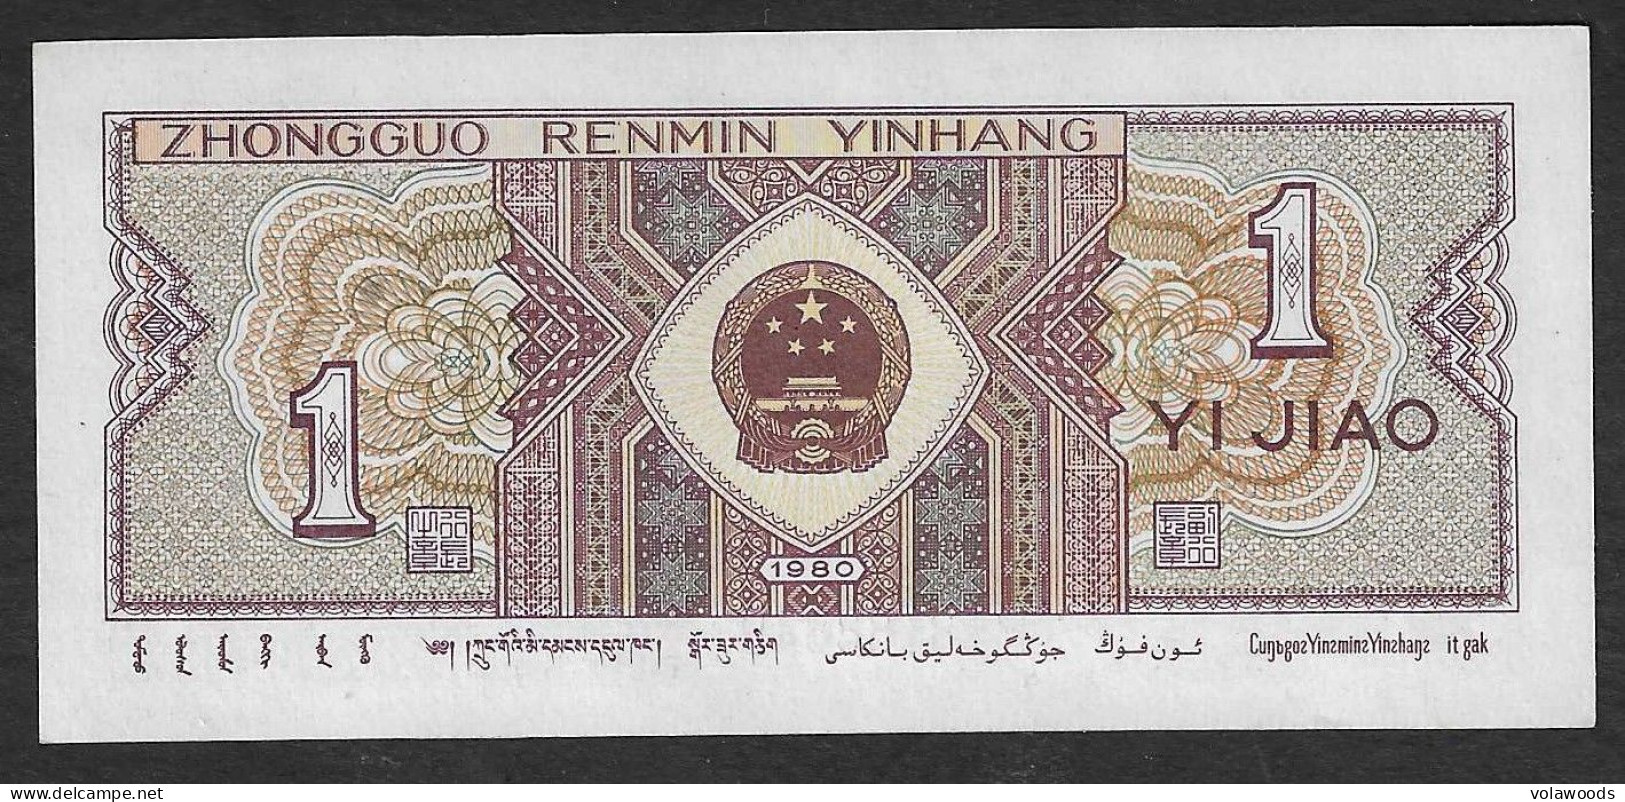 Cina - Banconota Non Circolata FdS UNC Da 1 Jiao P-881a.1 - 1980 #19 - Chine